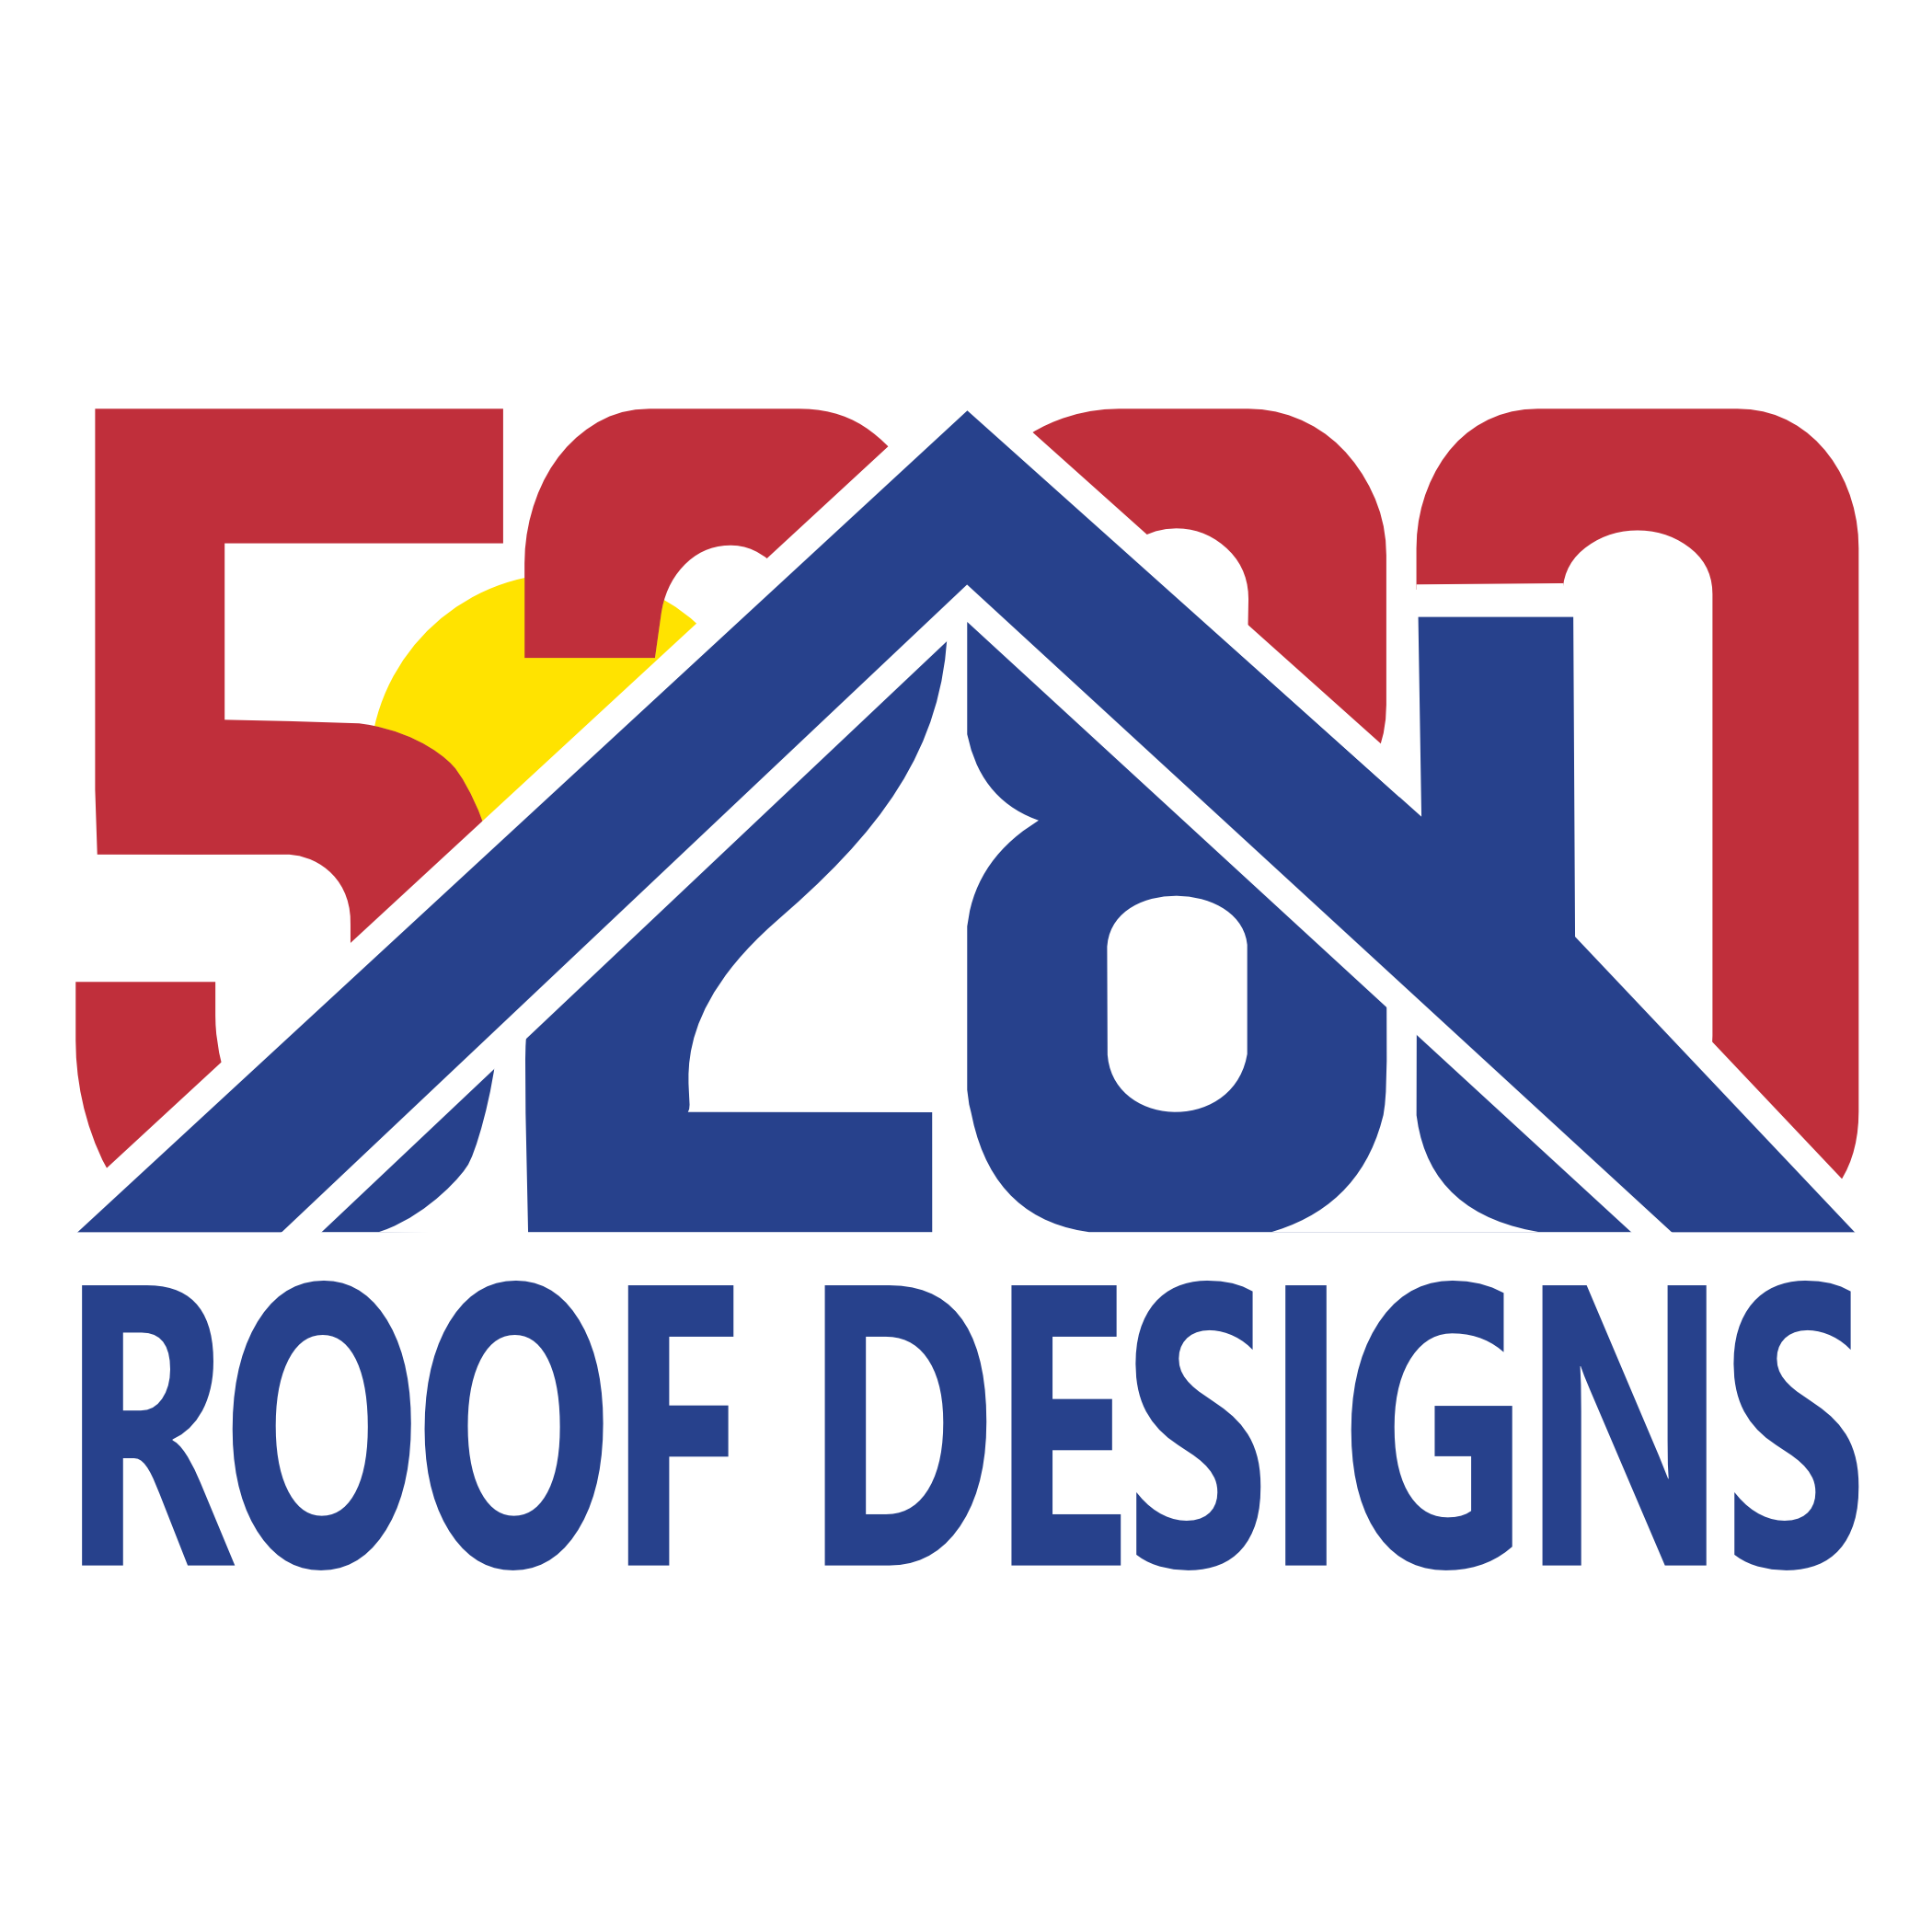 5280 Roof Designs, LLC Logo